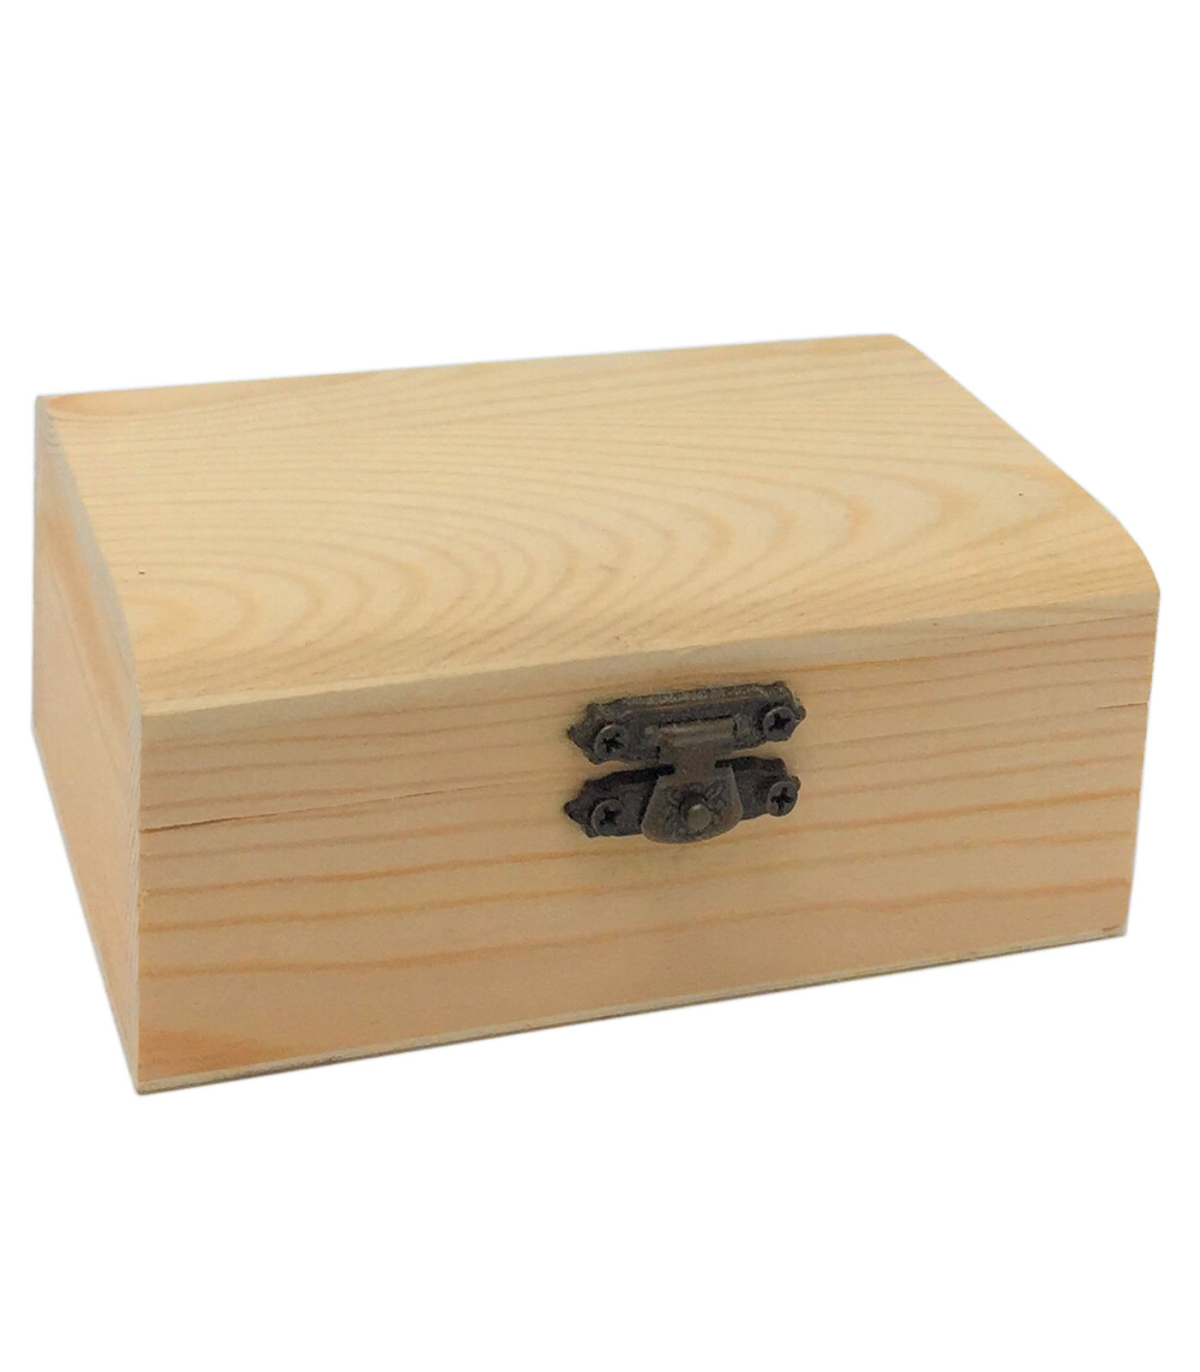 Cajas de madera